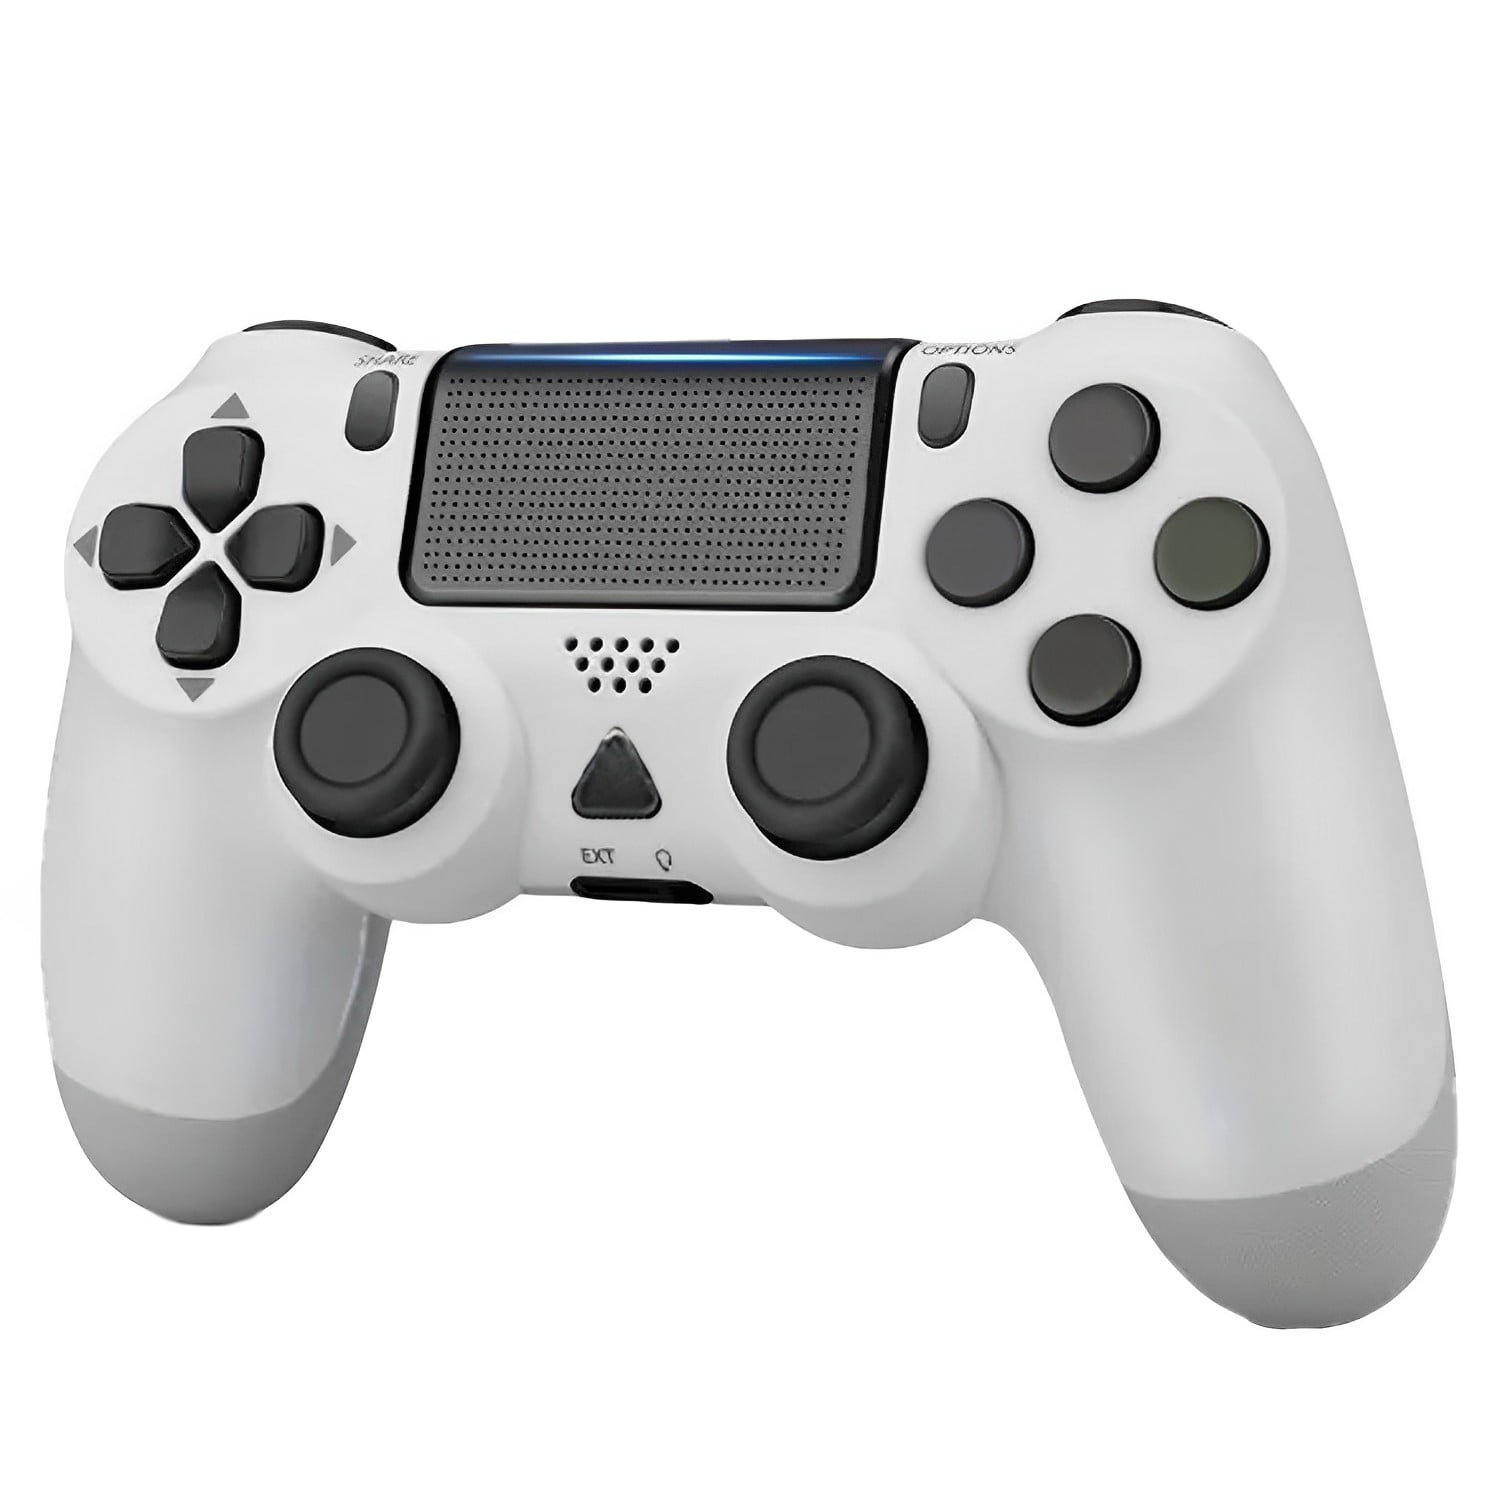 SPBPQY Wireless Controller Compatible with PS4/PS4 Pro/PS4 Slim Glacier White - Walmart.com